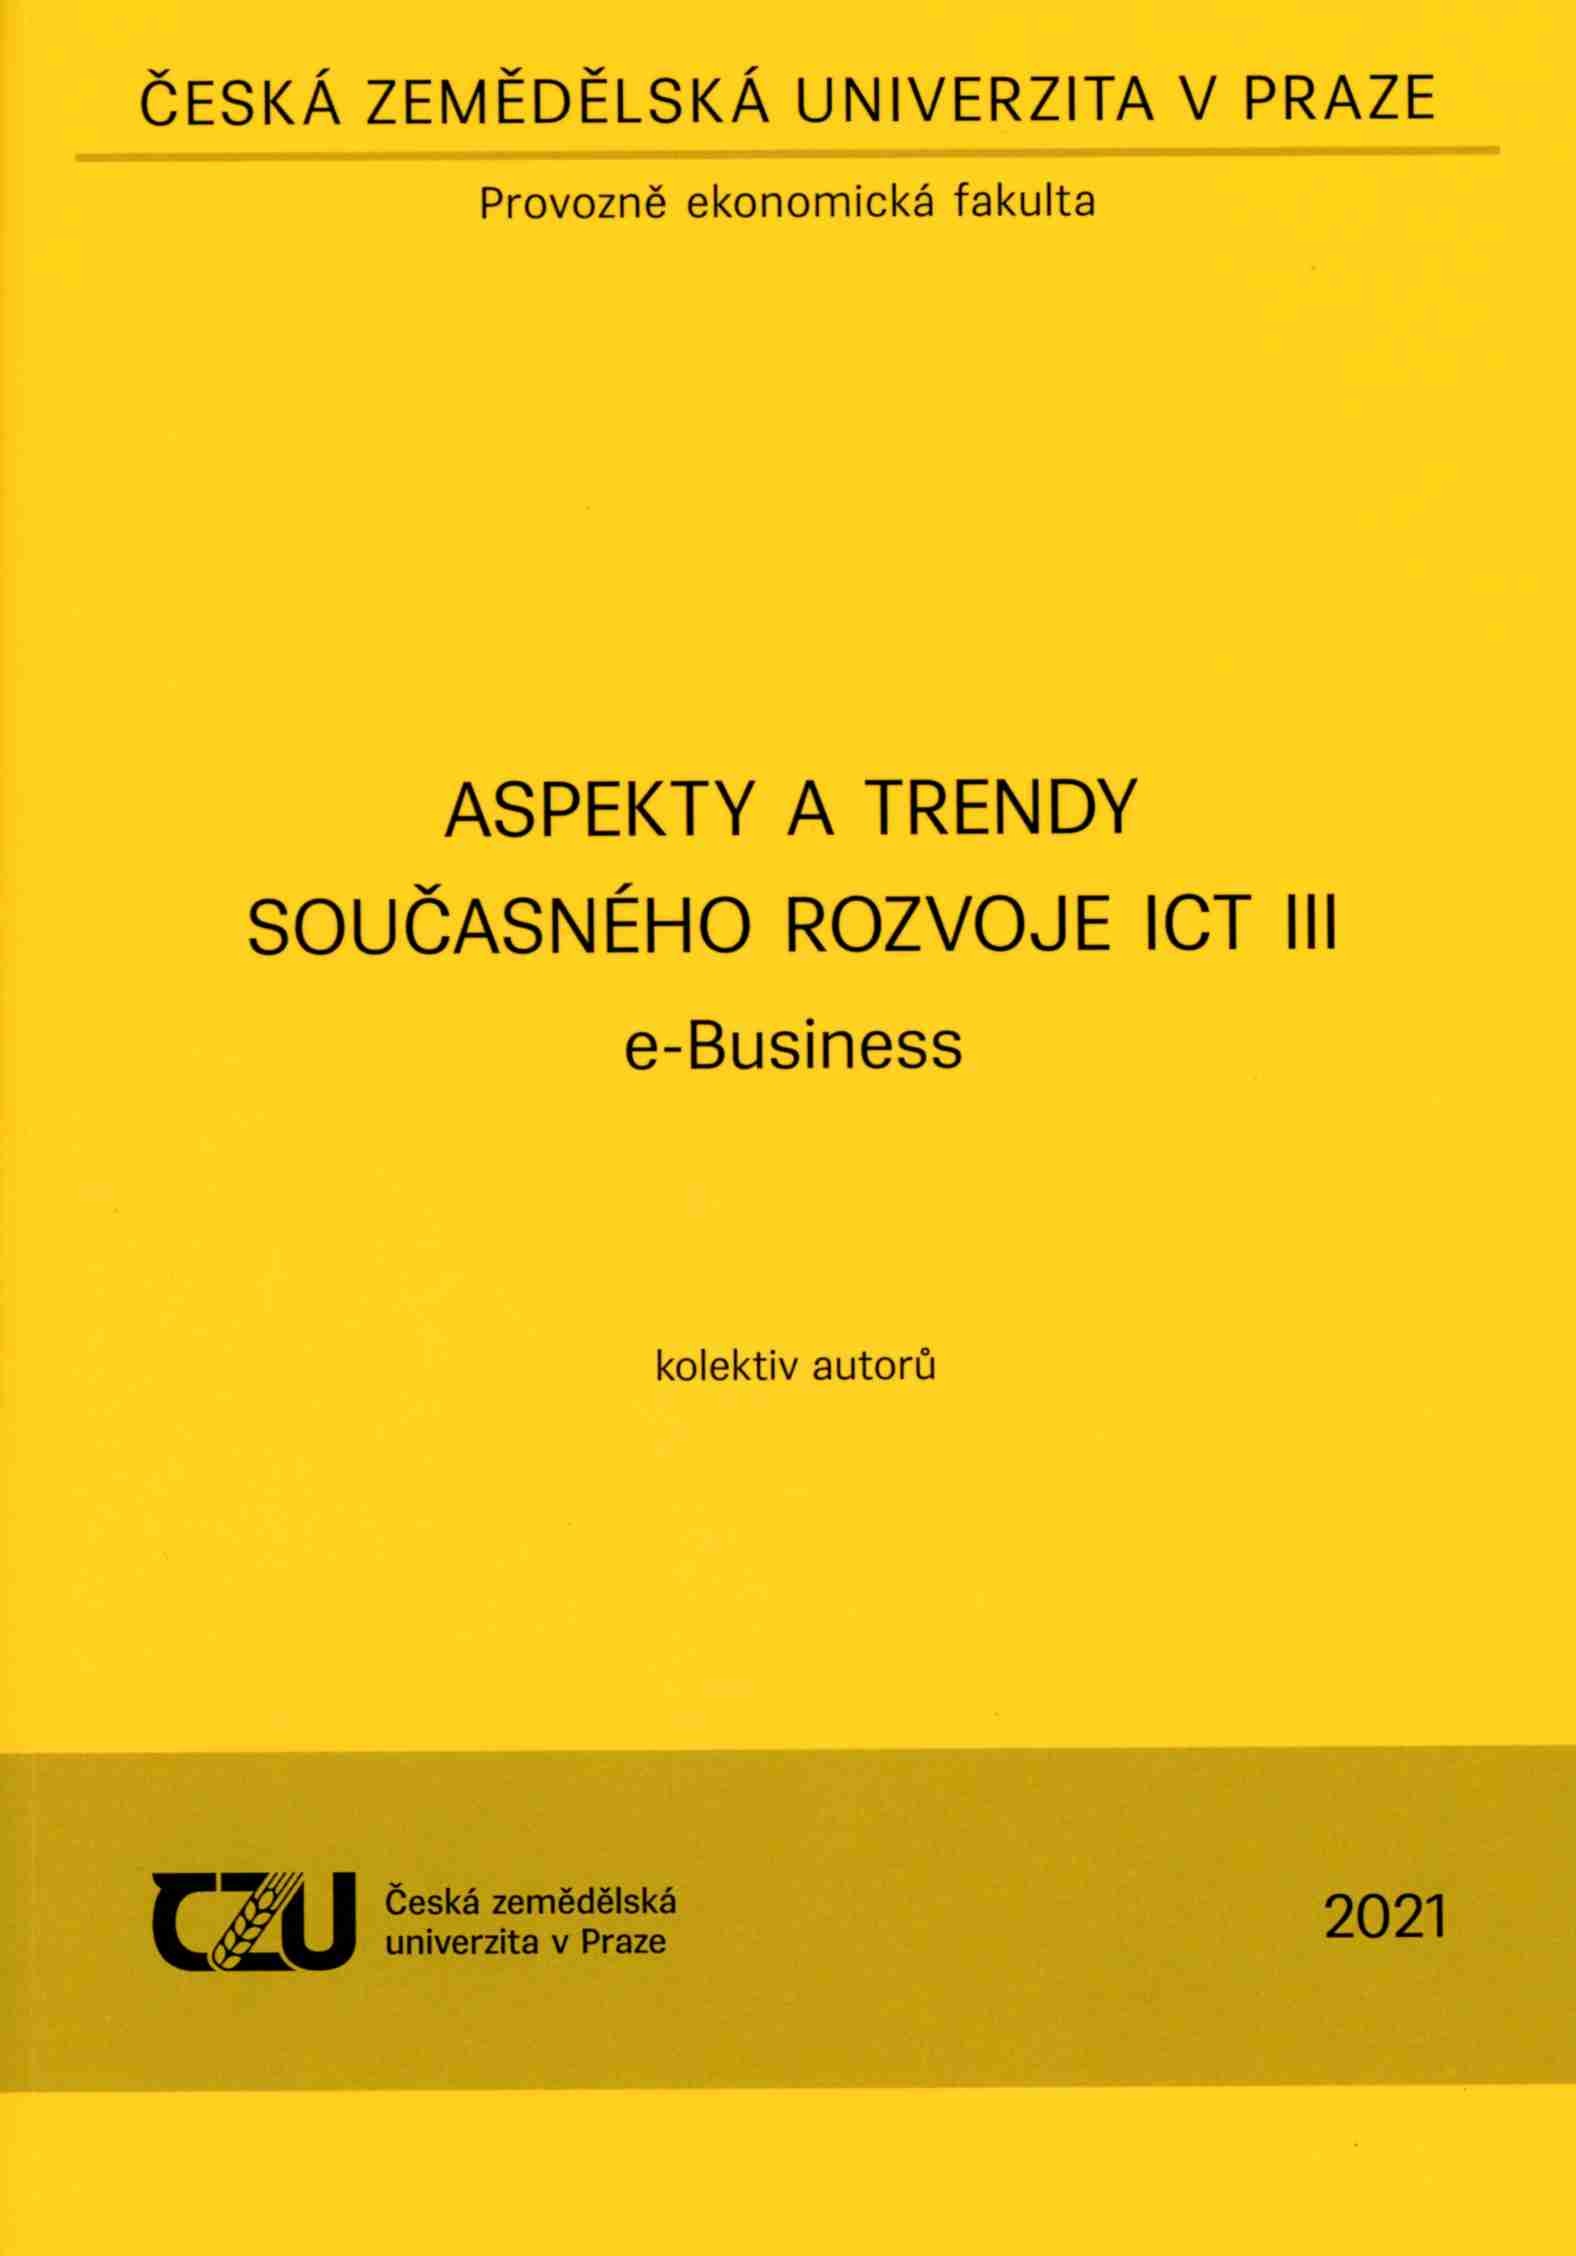 Aspekty a trendy současného rozvoje ICT III e-Business